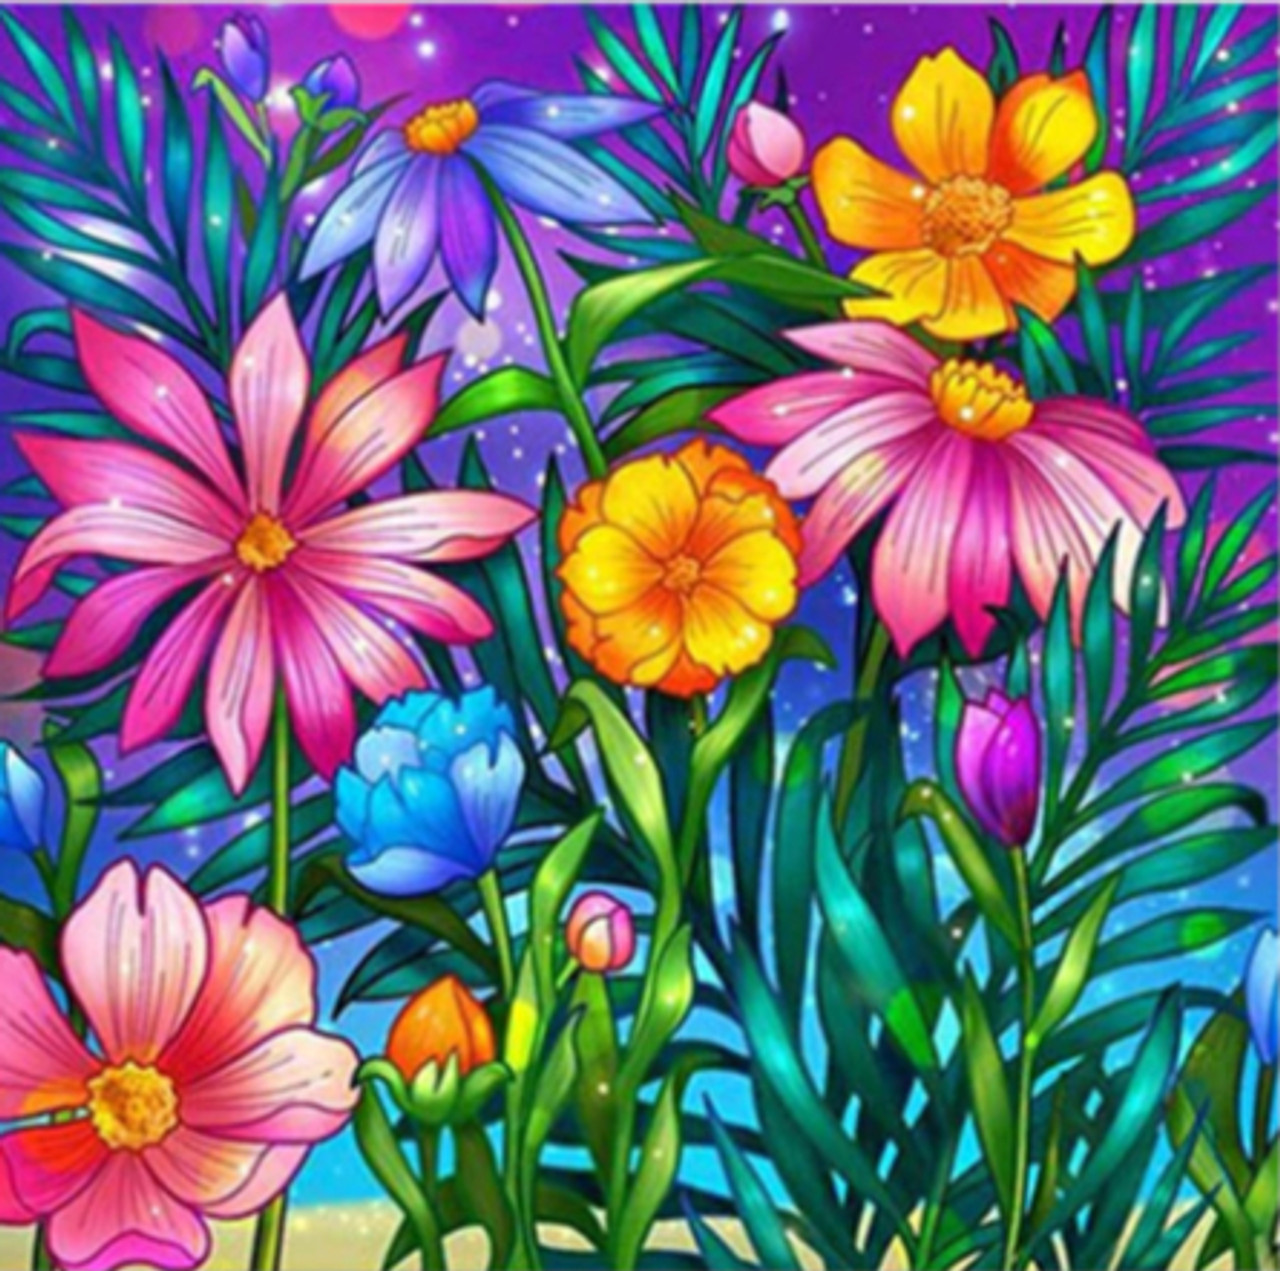 Colorful Flowers Still Life, 5D Diamond Painting Kits